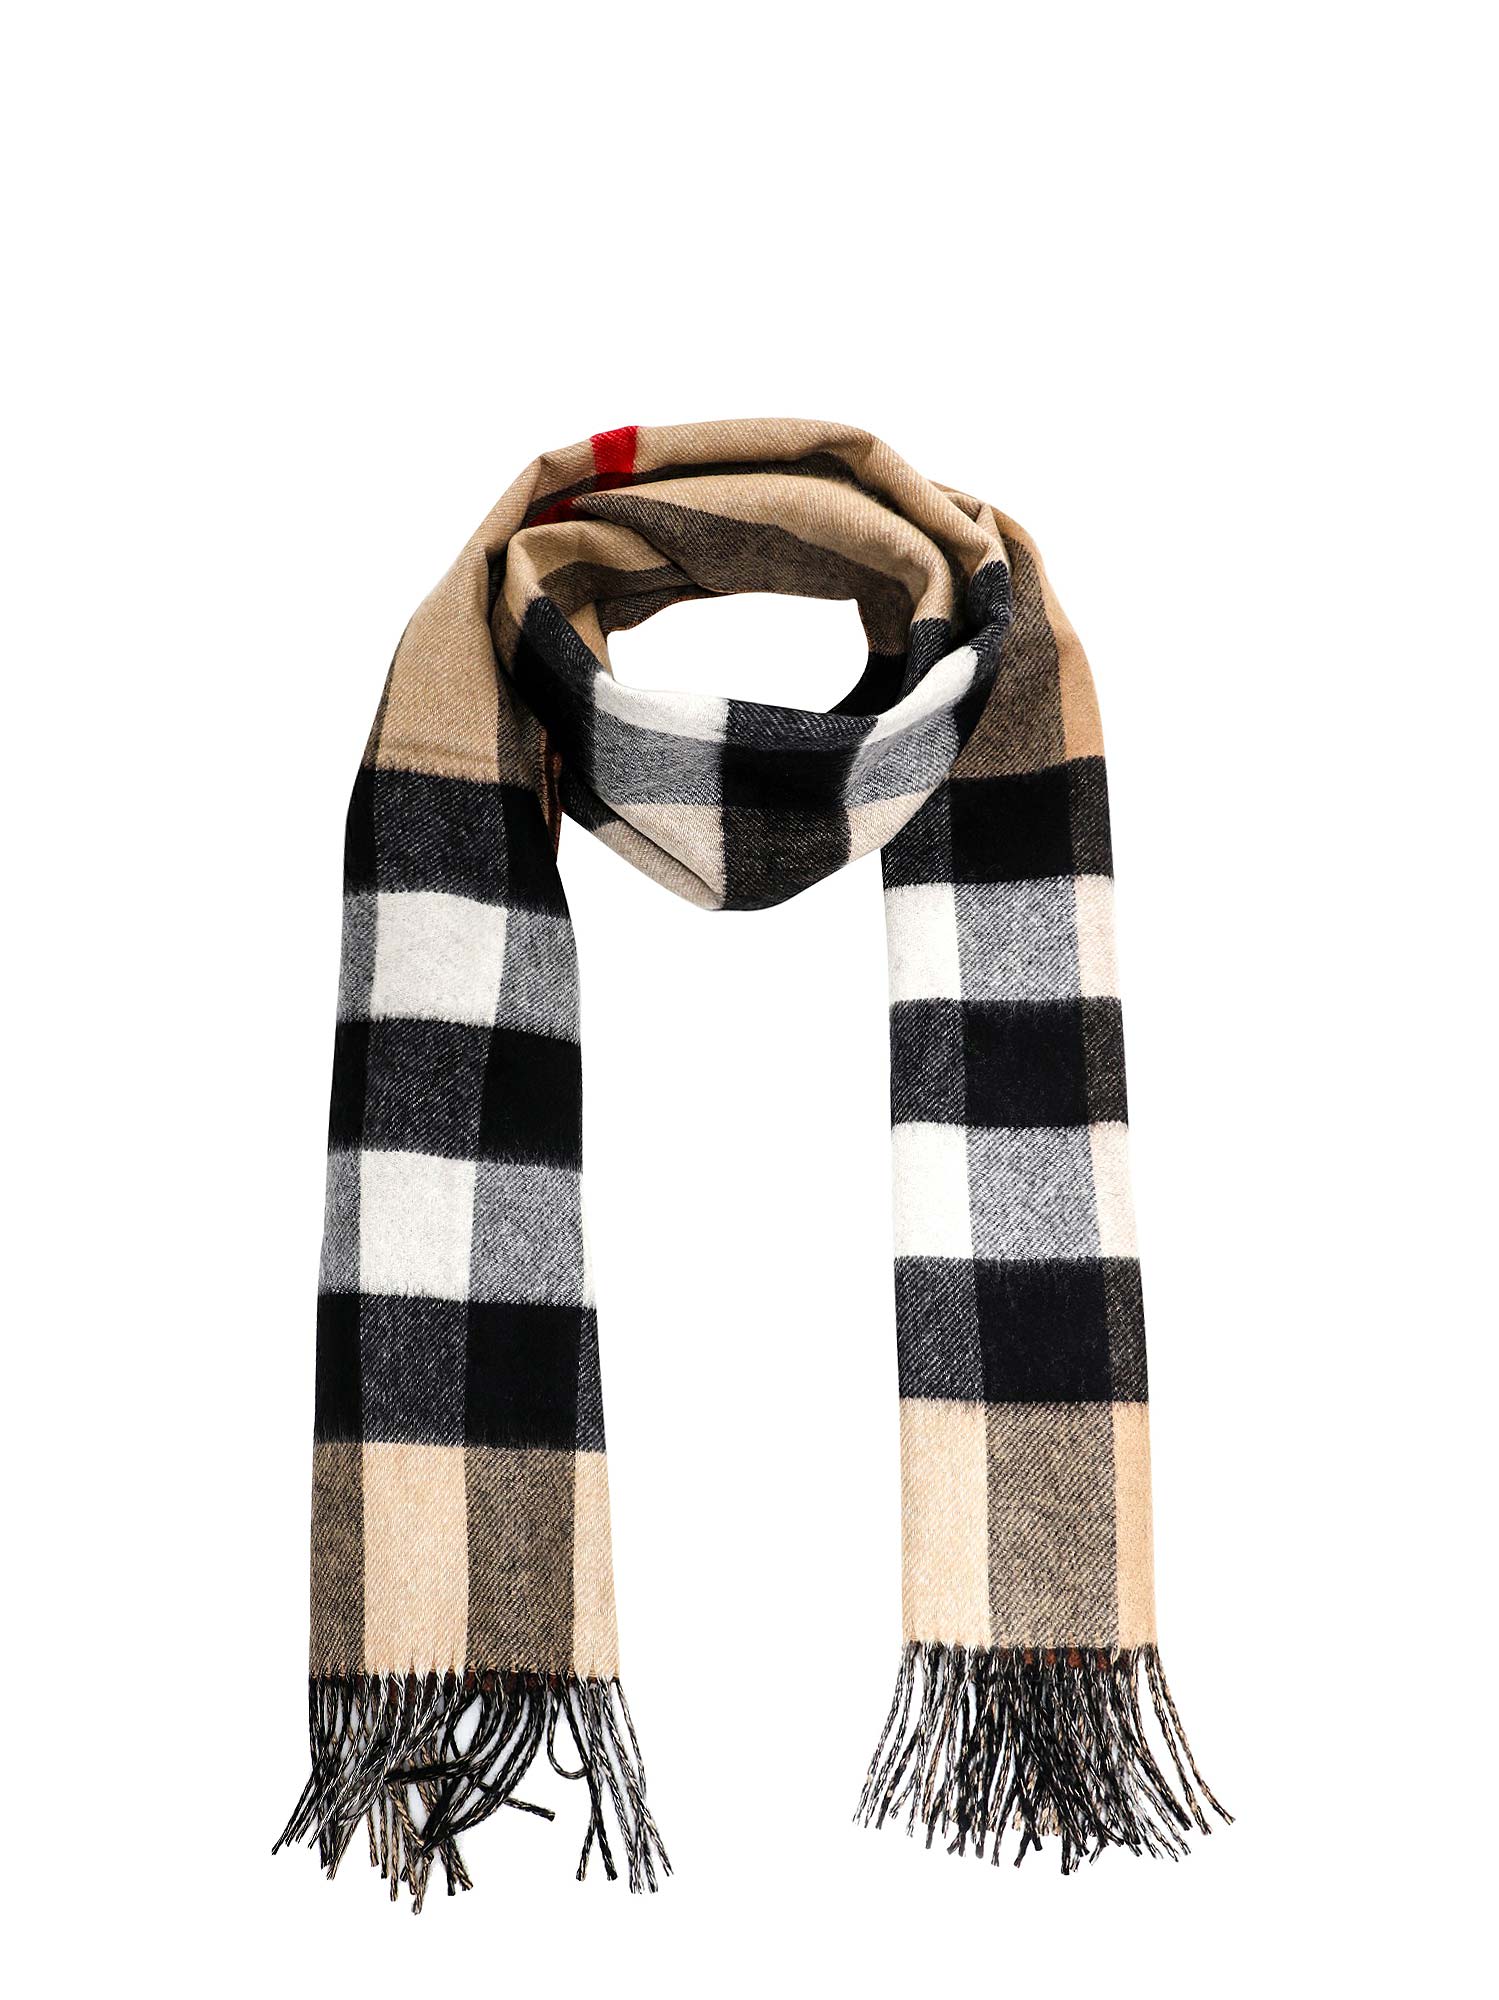 burberry scarf sale